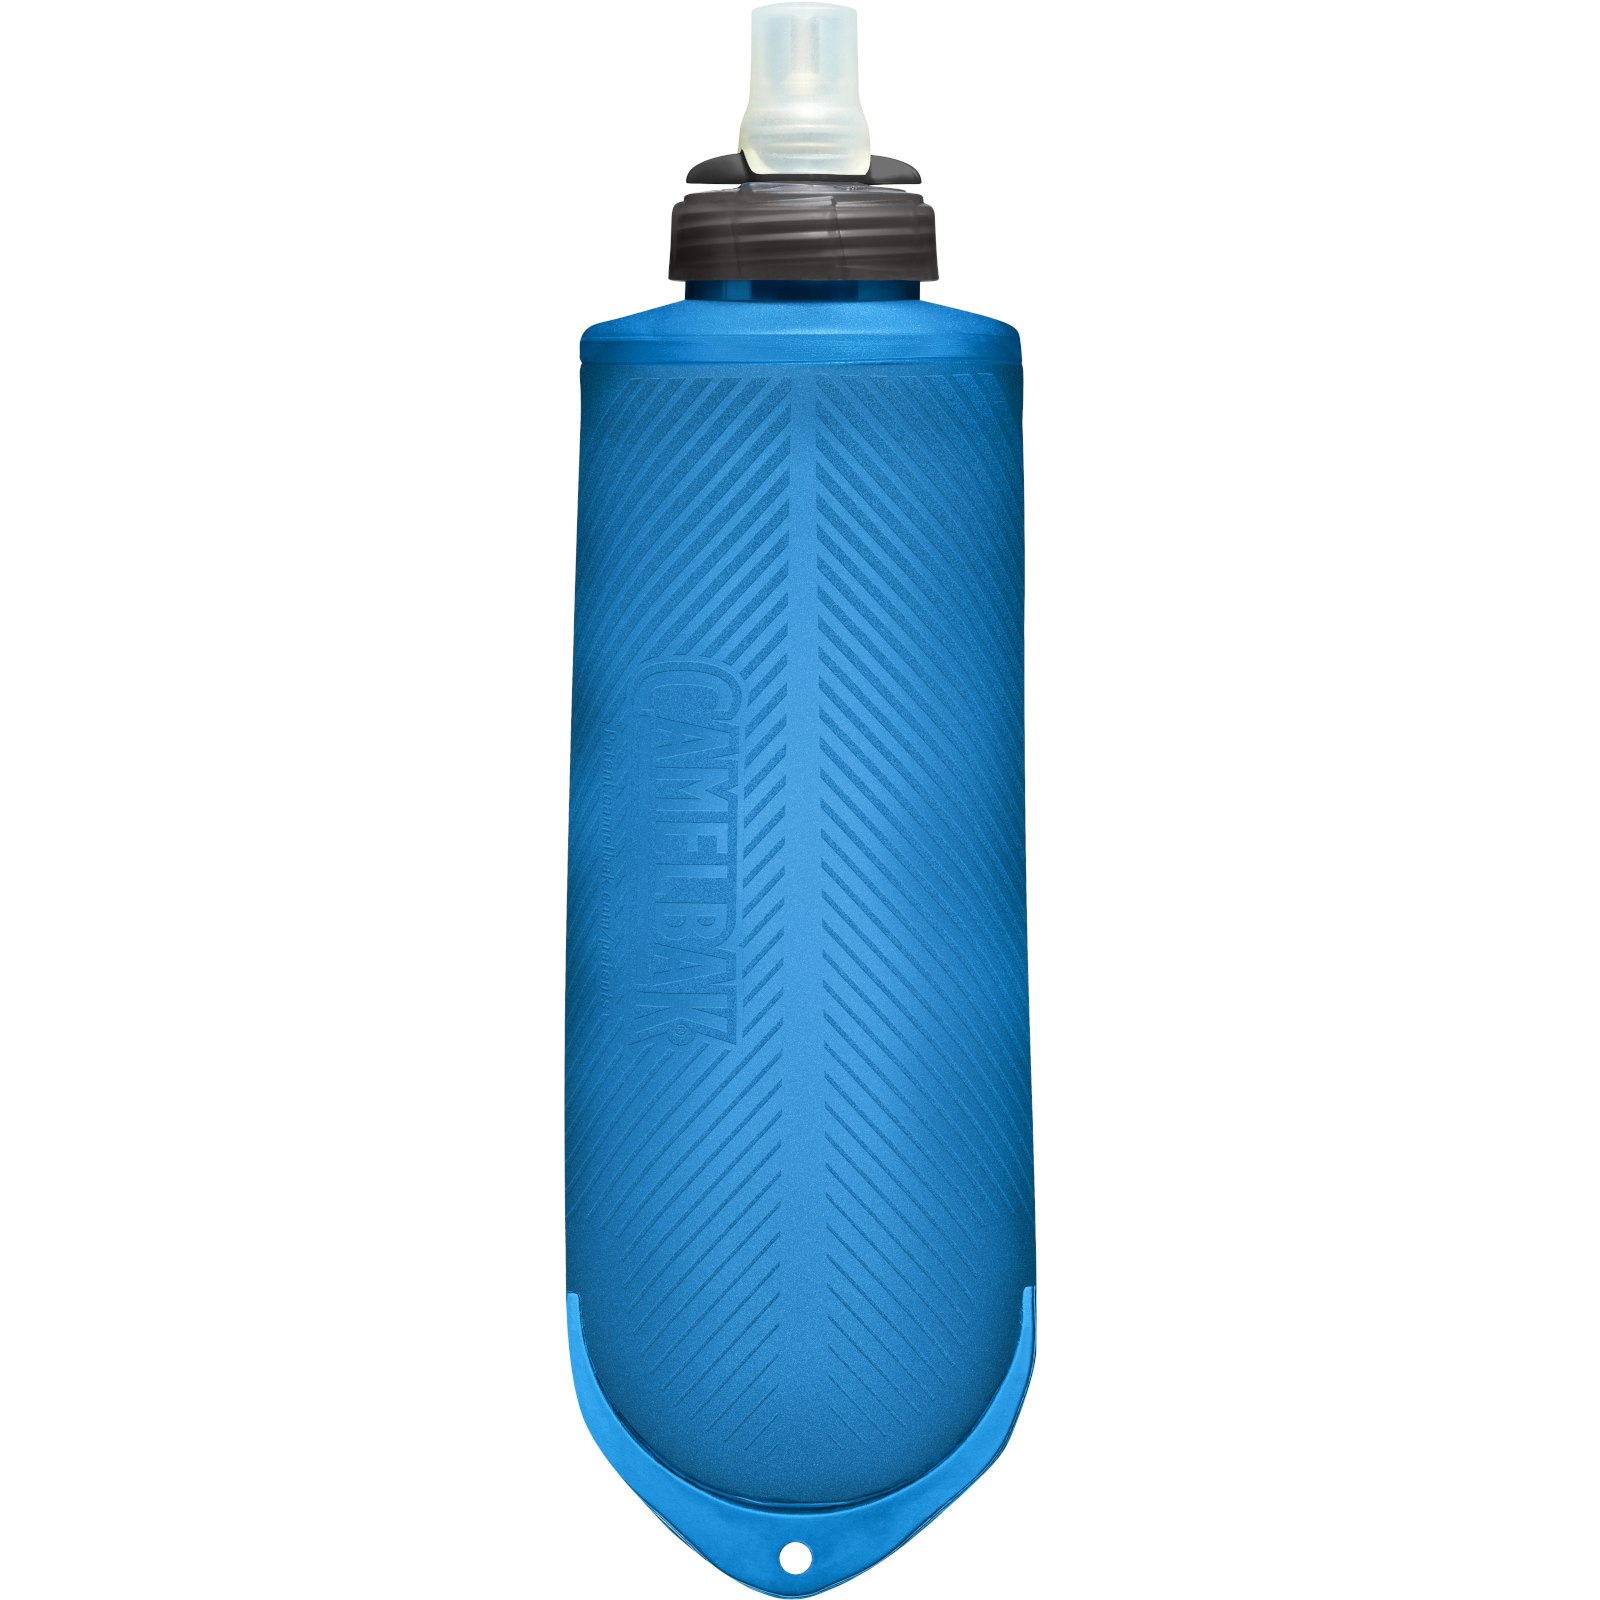 Productfoto van CamelBak Quick Stow Flask Bottle 620ml - Blue